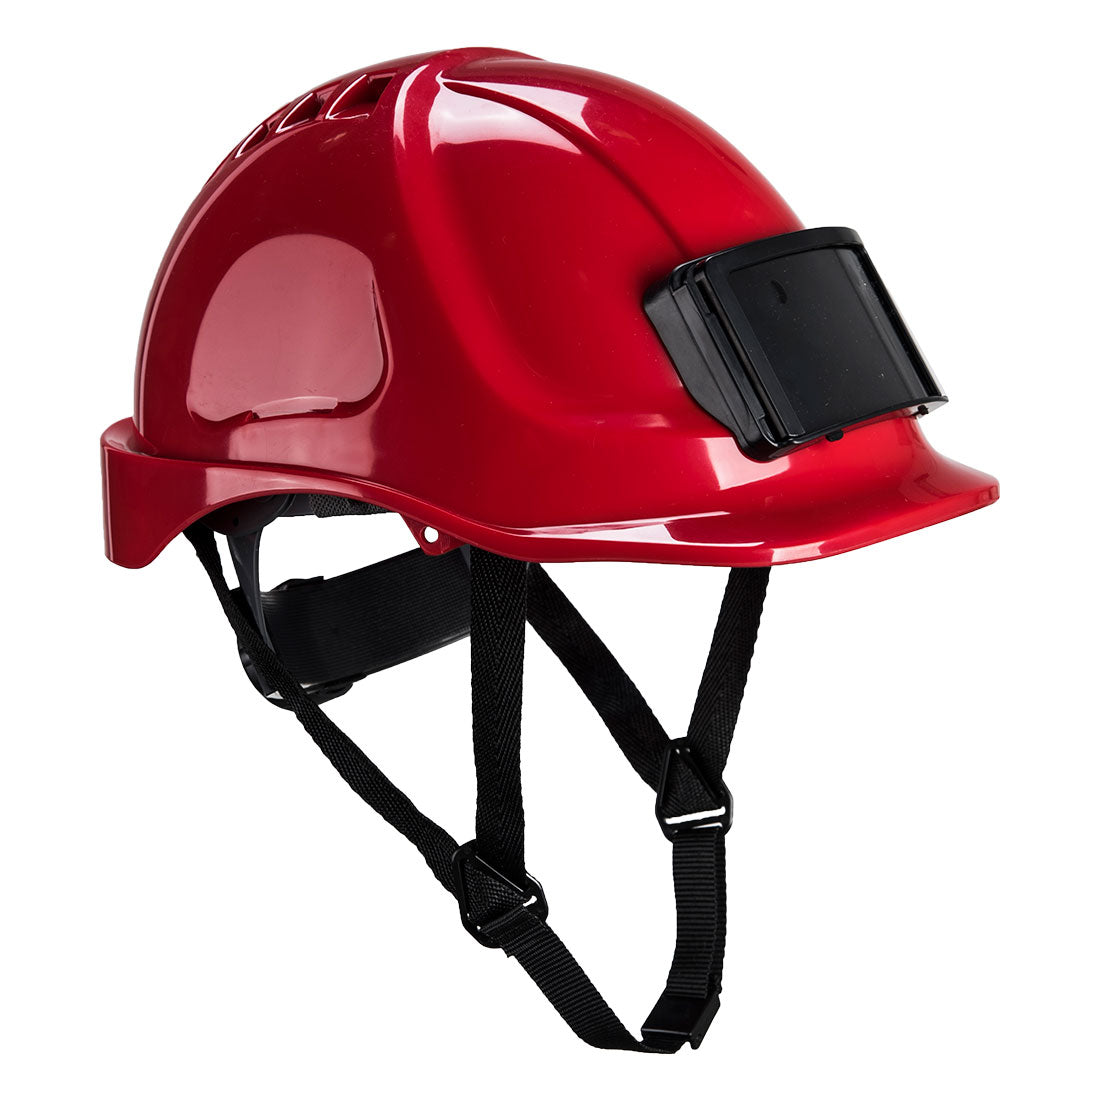 Endurance Badge Holder Helmet  (PB55)